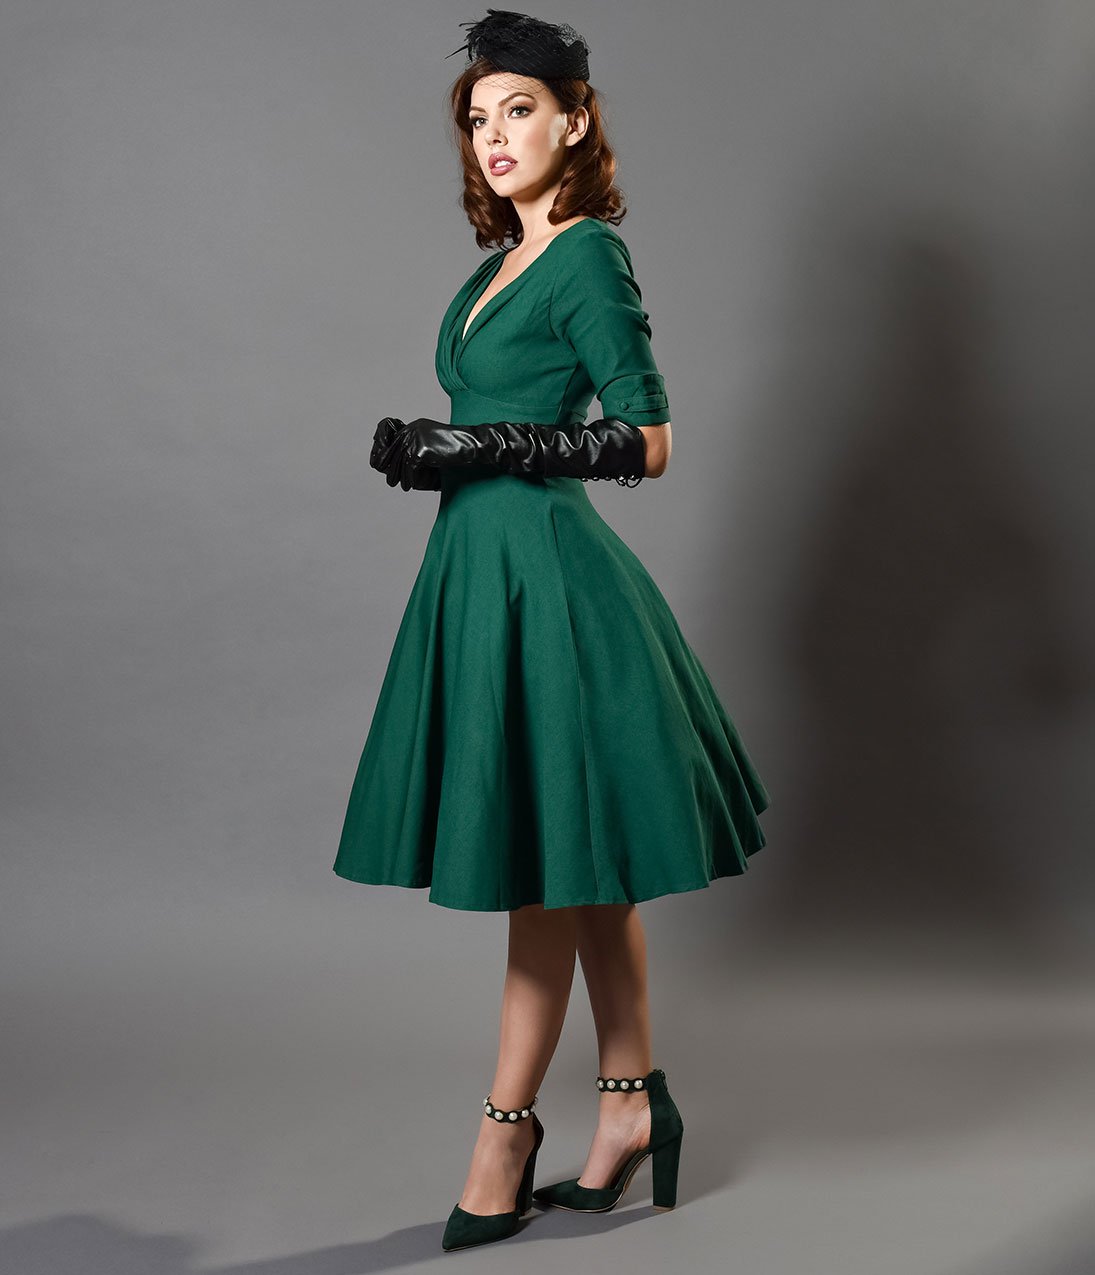 The idea of vintage dress